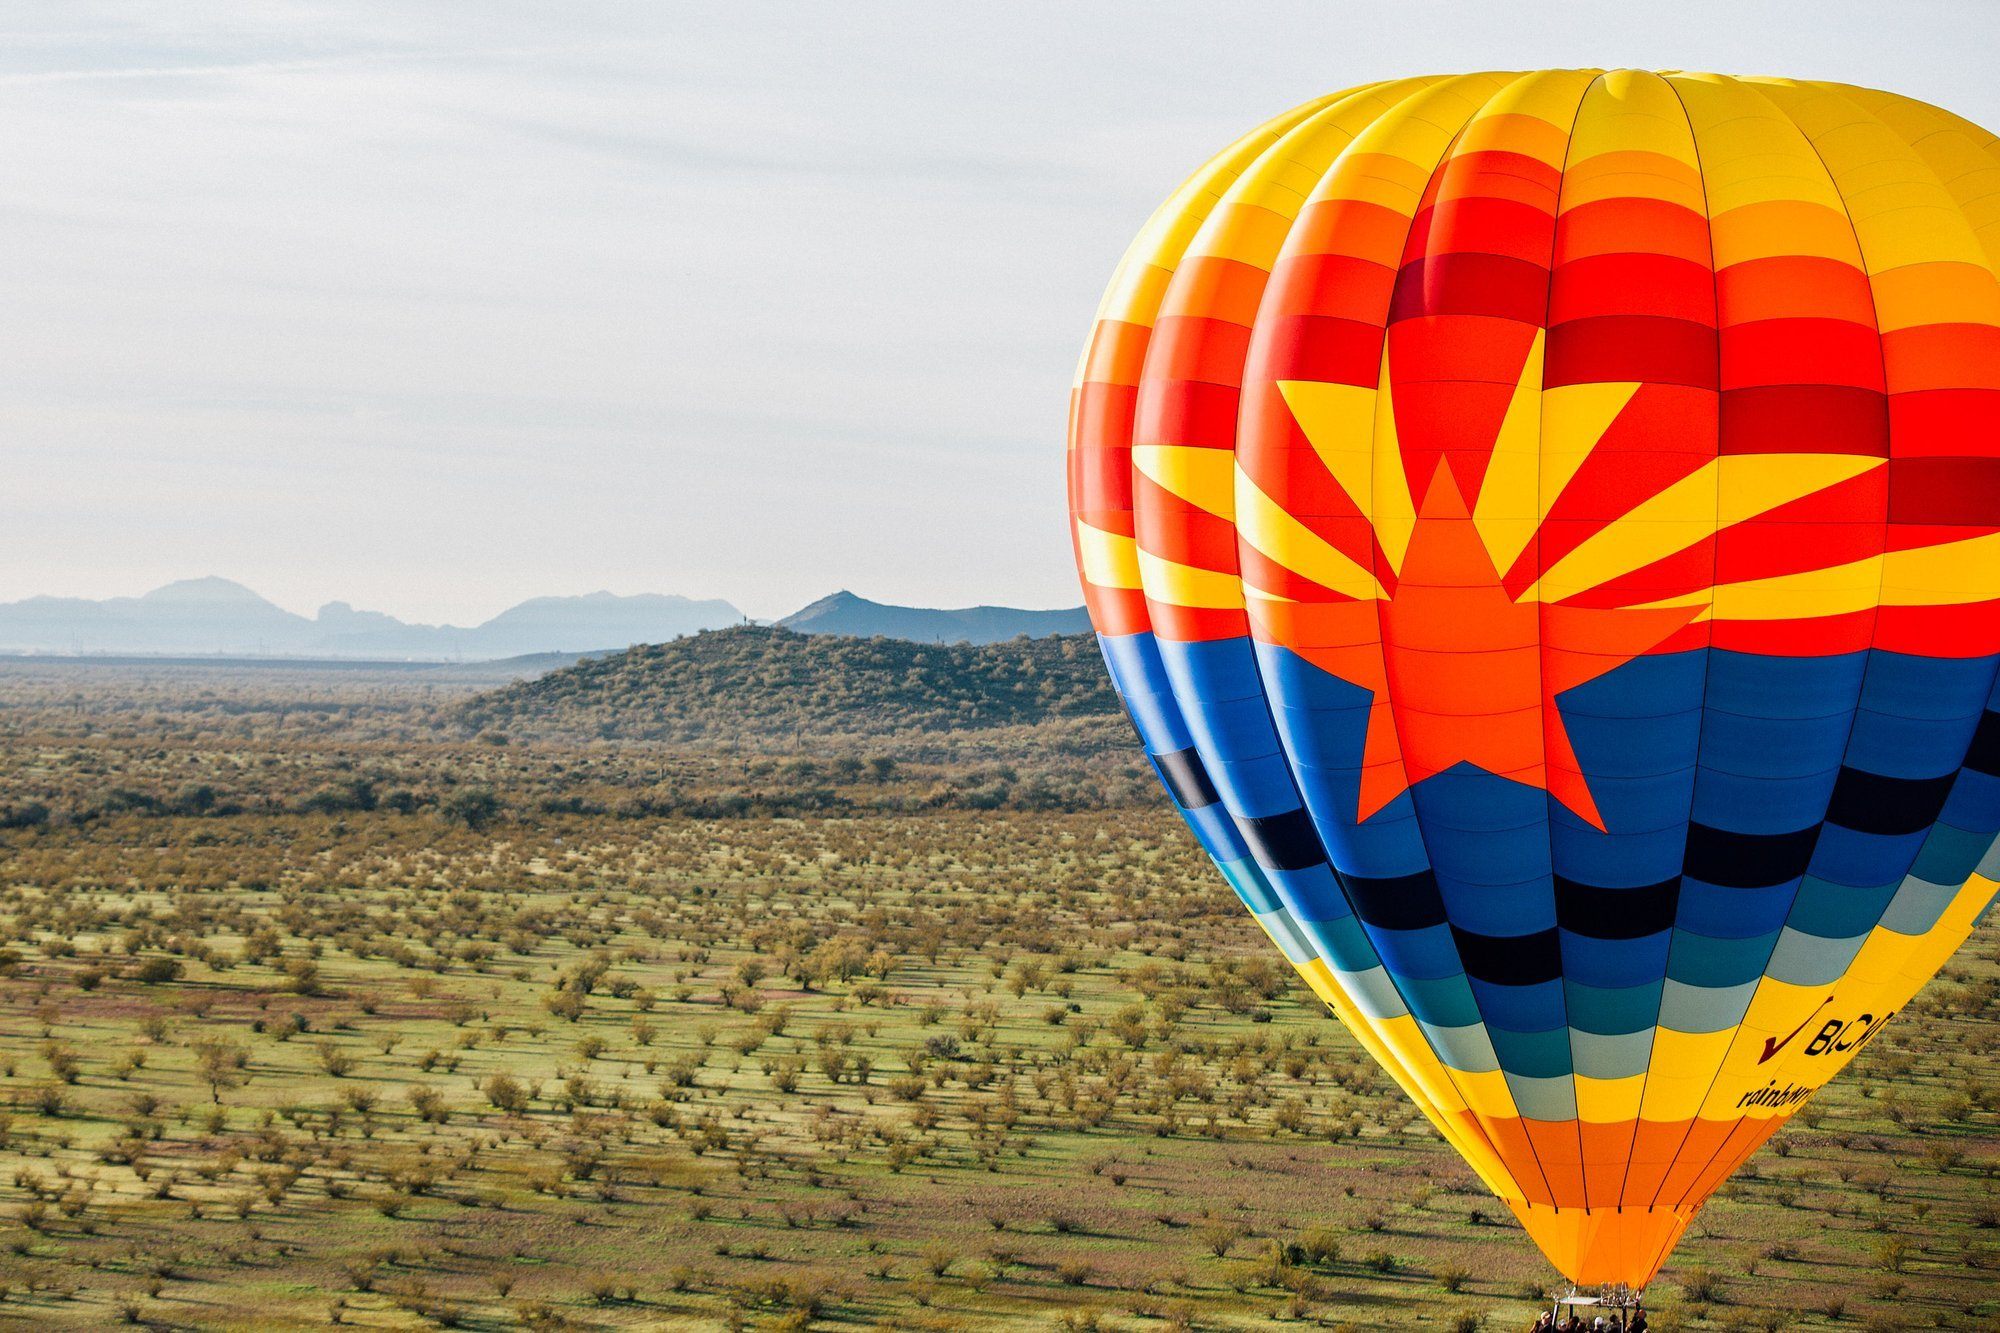 Hot air balloon flying over Scottsdale, AZ